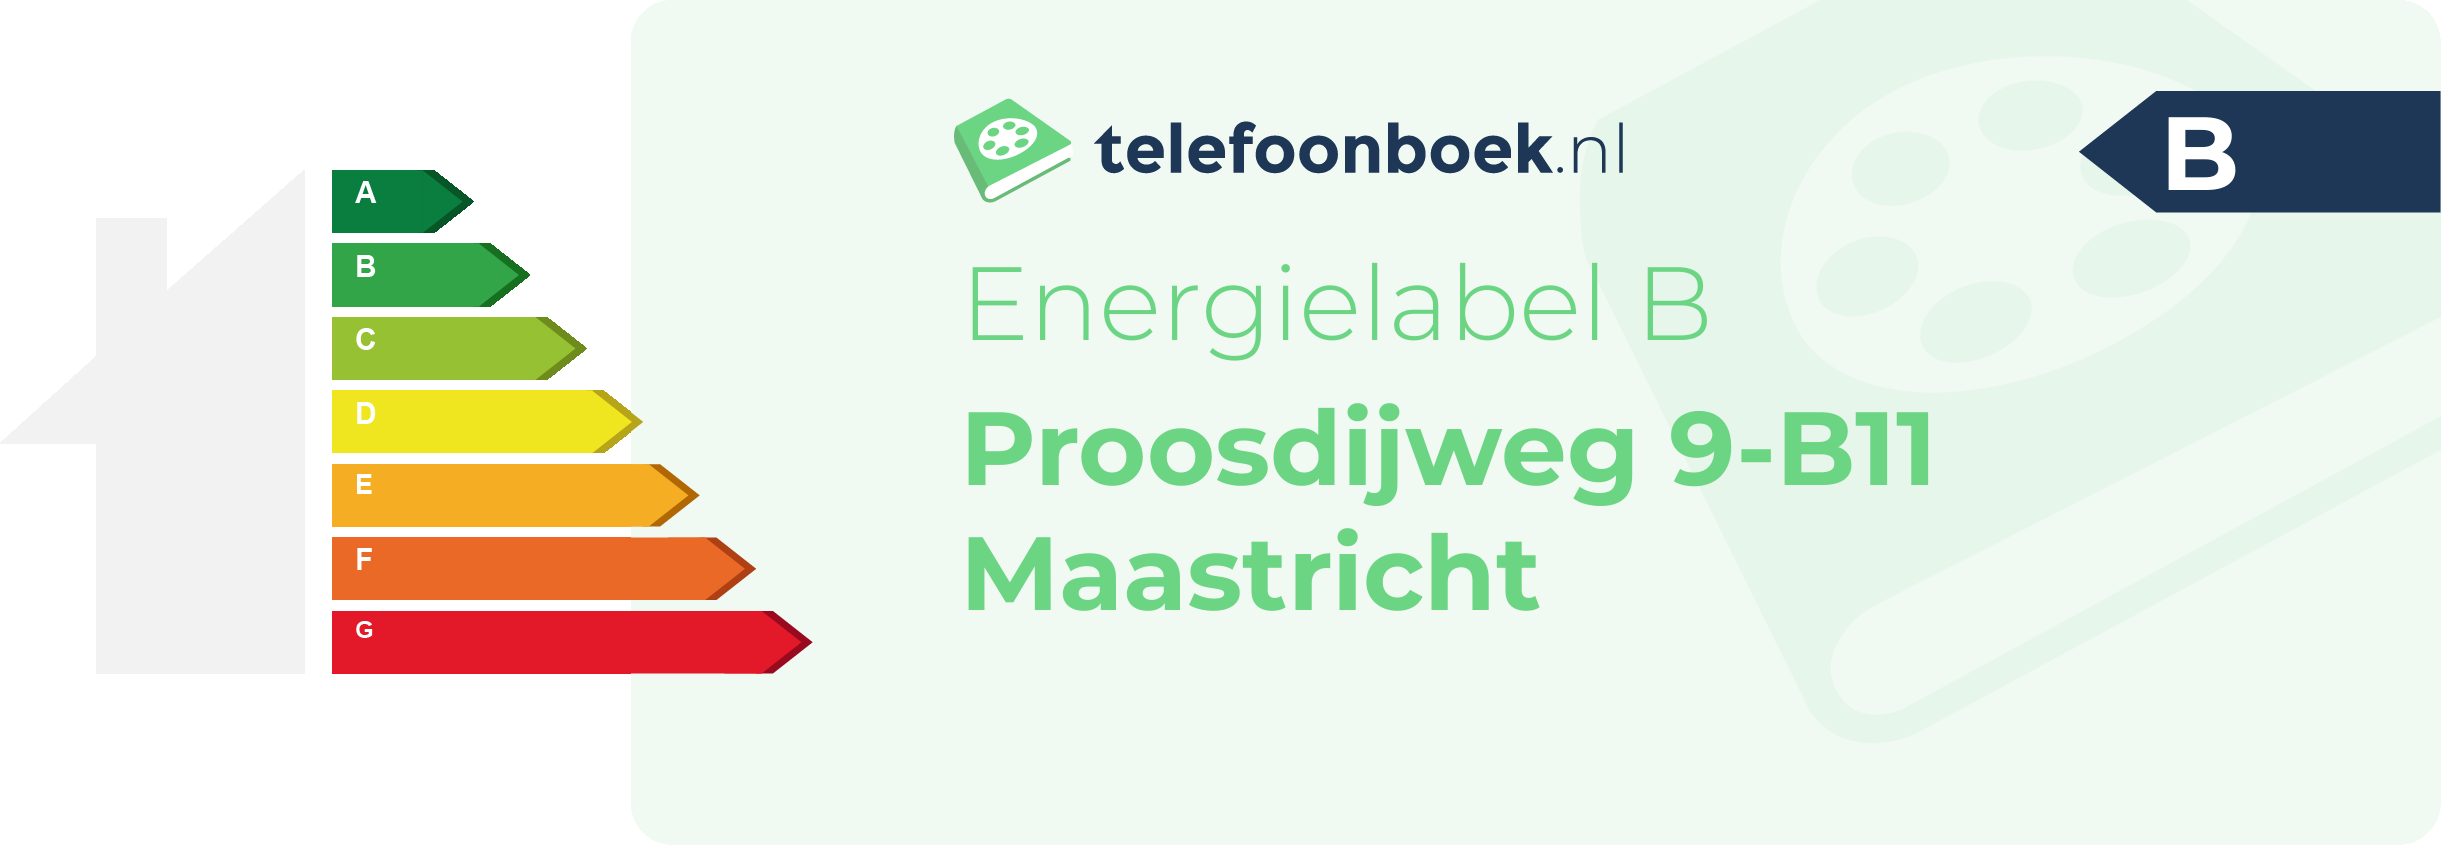 Energielabel Proosdijweg 9-B11 Maastricht